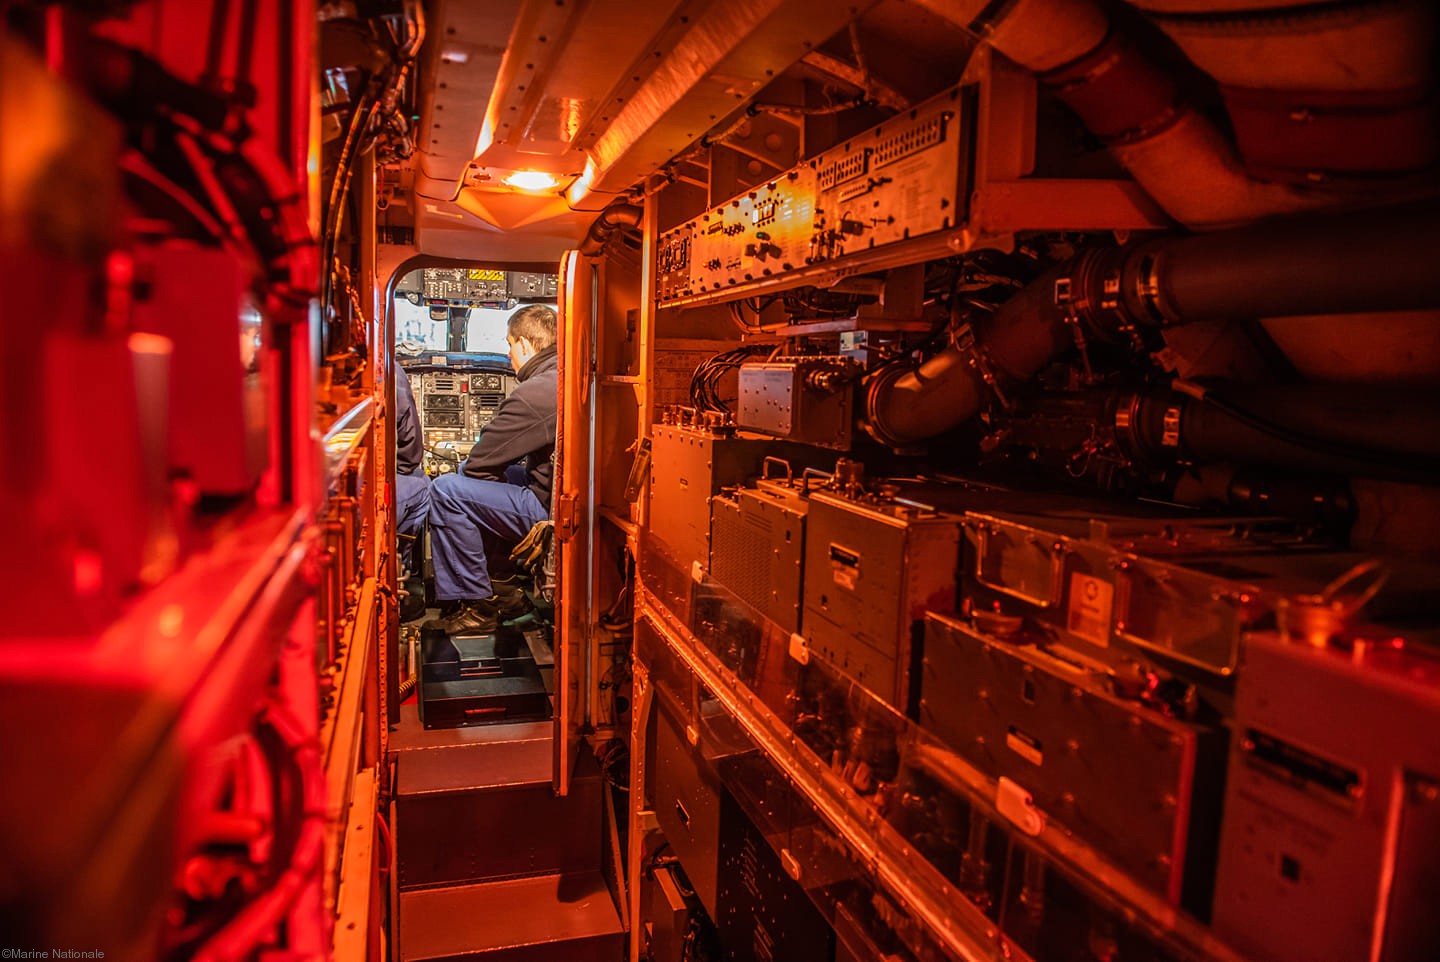 e-2c hawkeye french navy marine nationale grumman aeronavale flottille 4f aircraft carrier charles de gaulle r-91 09 inside